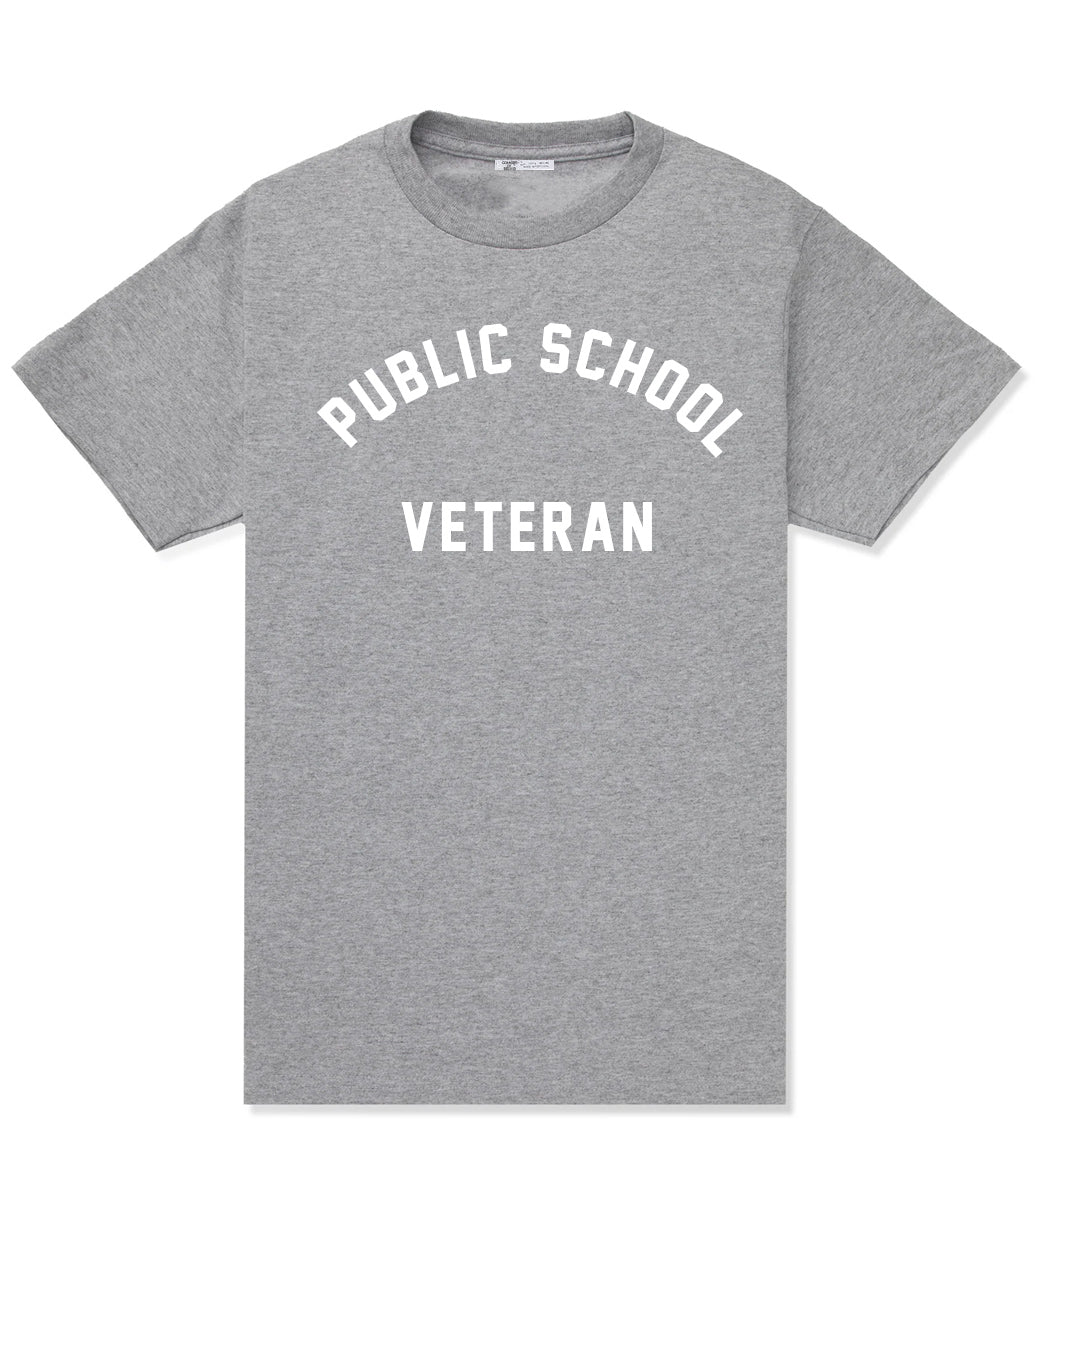 Public School Veteran Athletic Grey Cotton Jersey T-Shirt